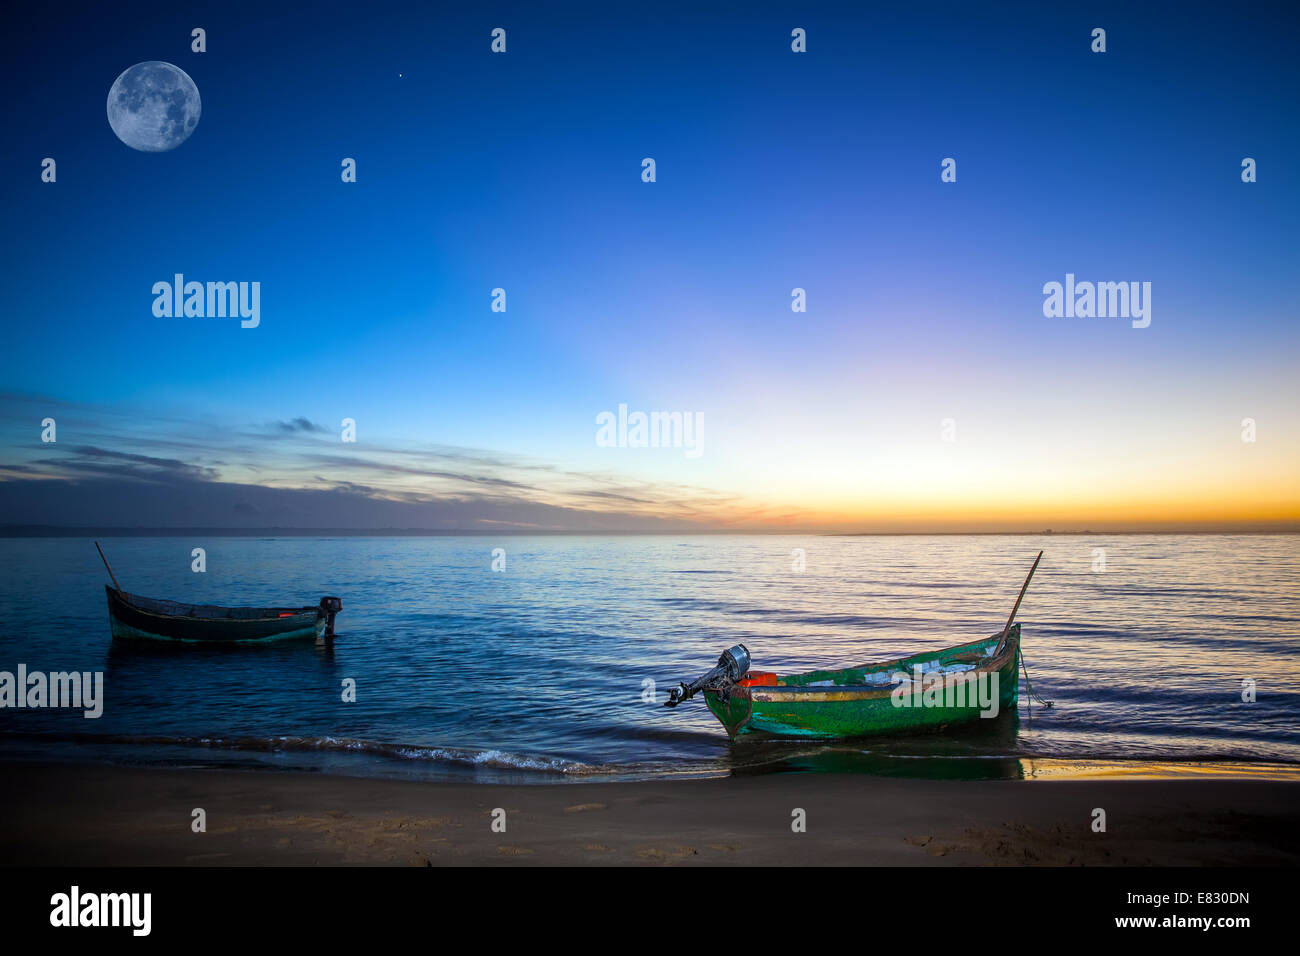 a fishboat in naila lagoon on sunset Stock Photo